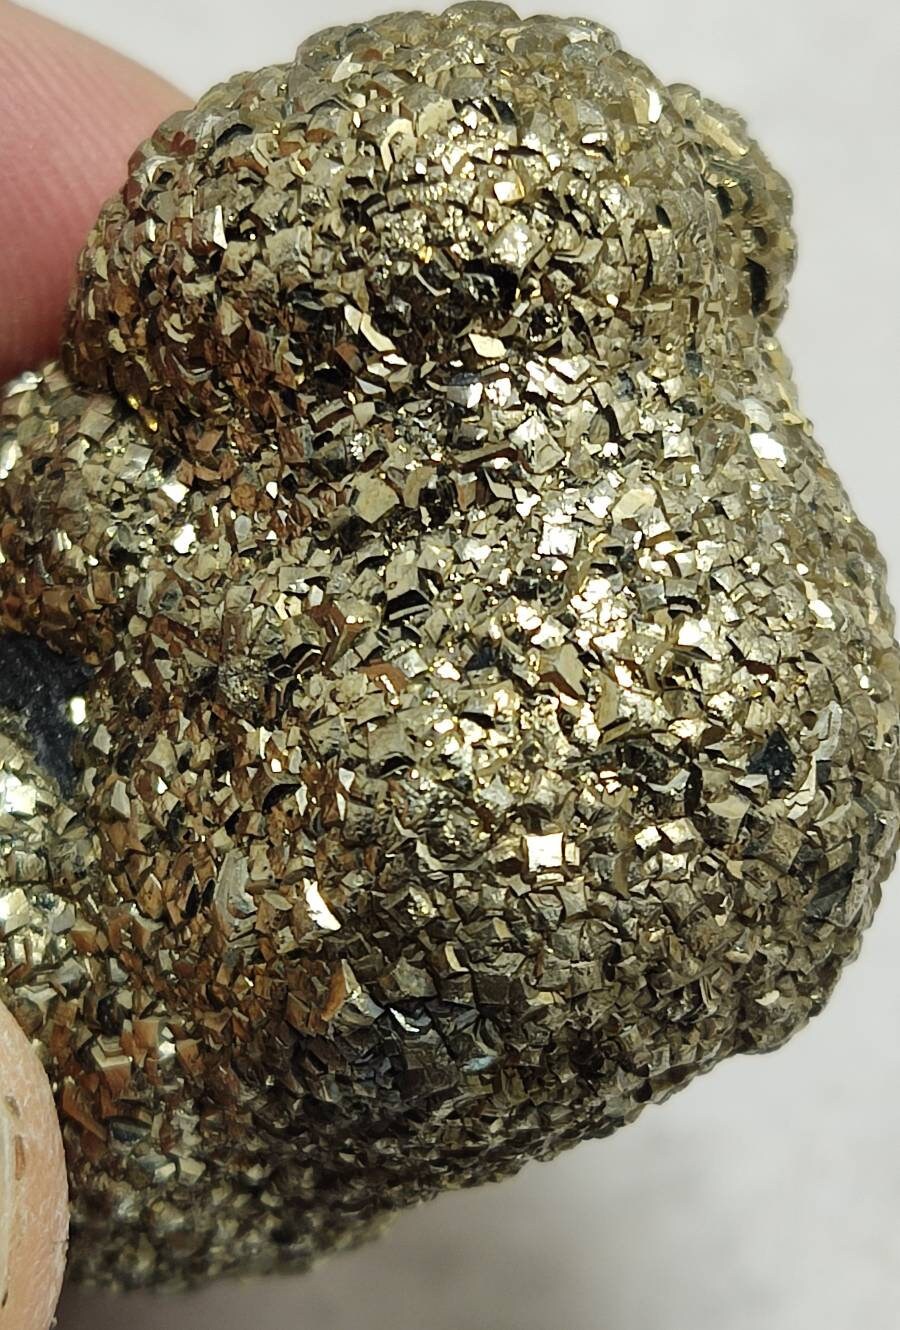 An amazing specimen of pyrite/marcasite 83 grams